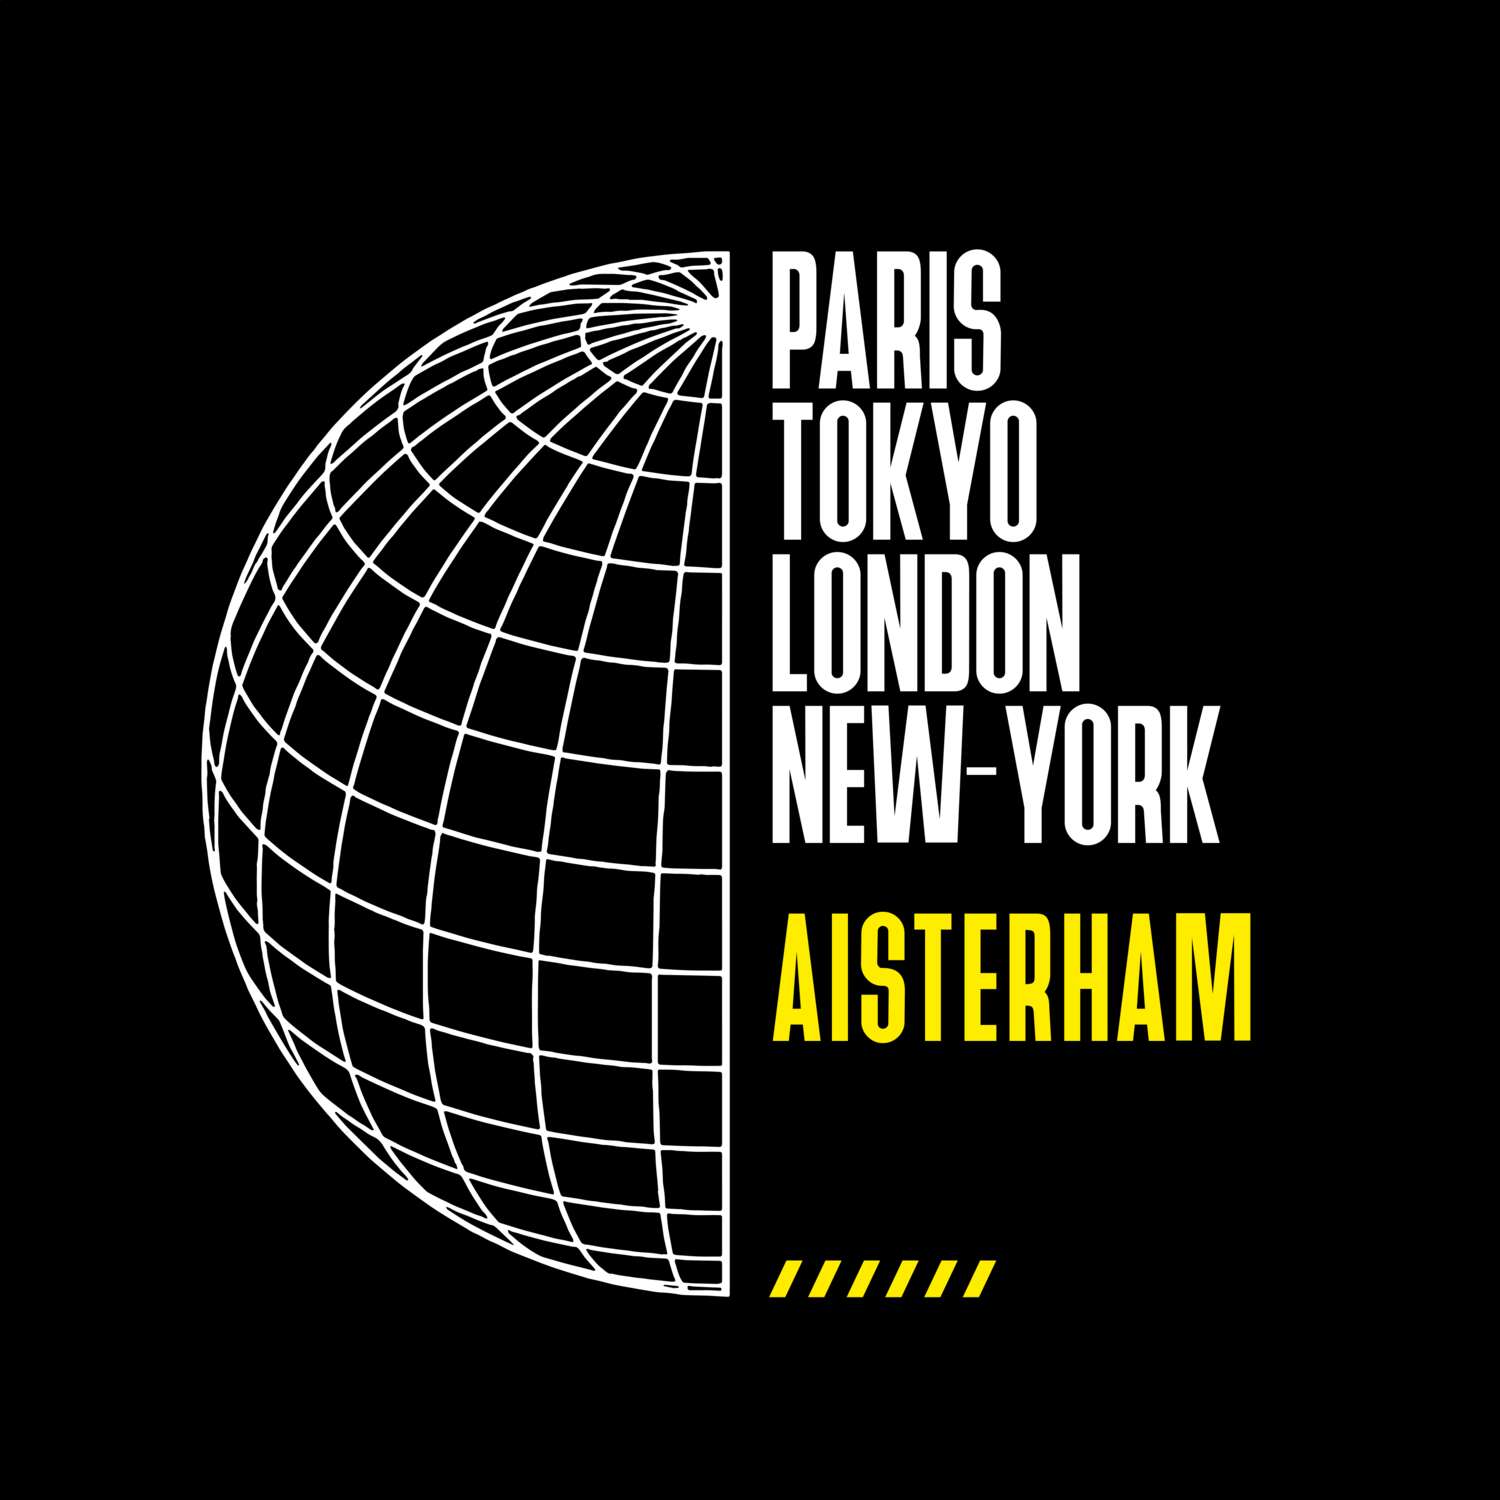 Aisterham T-Shirt »Paris Tokyo London«